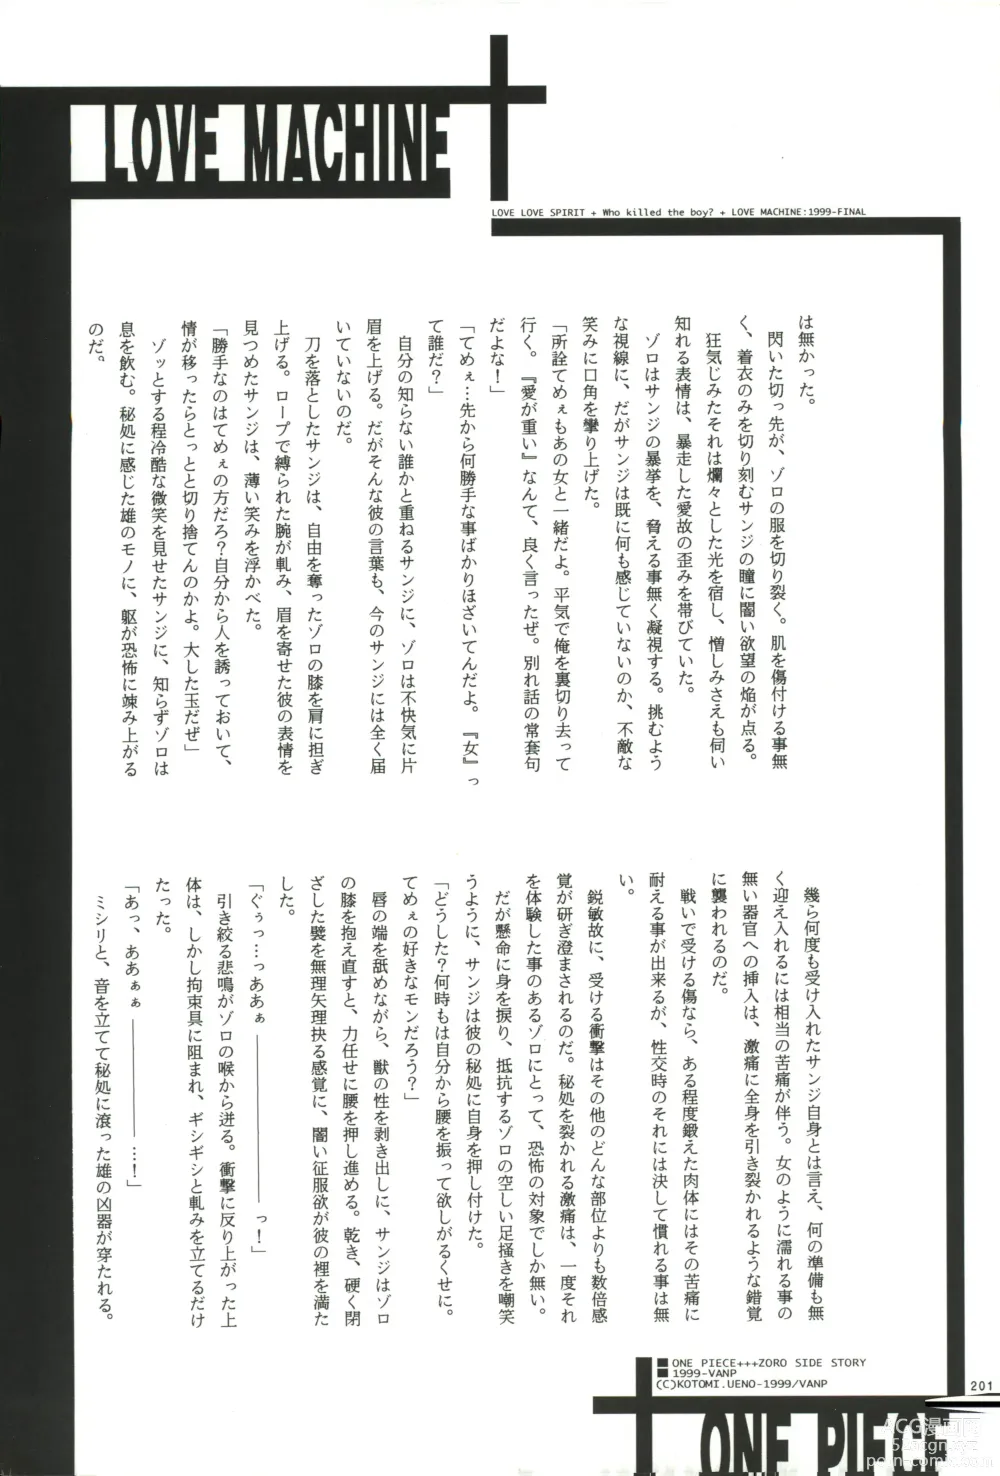 Page 200 of doujinshi FLASH BACK